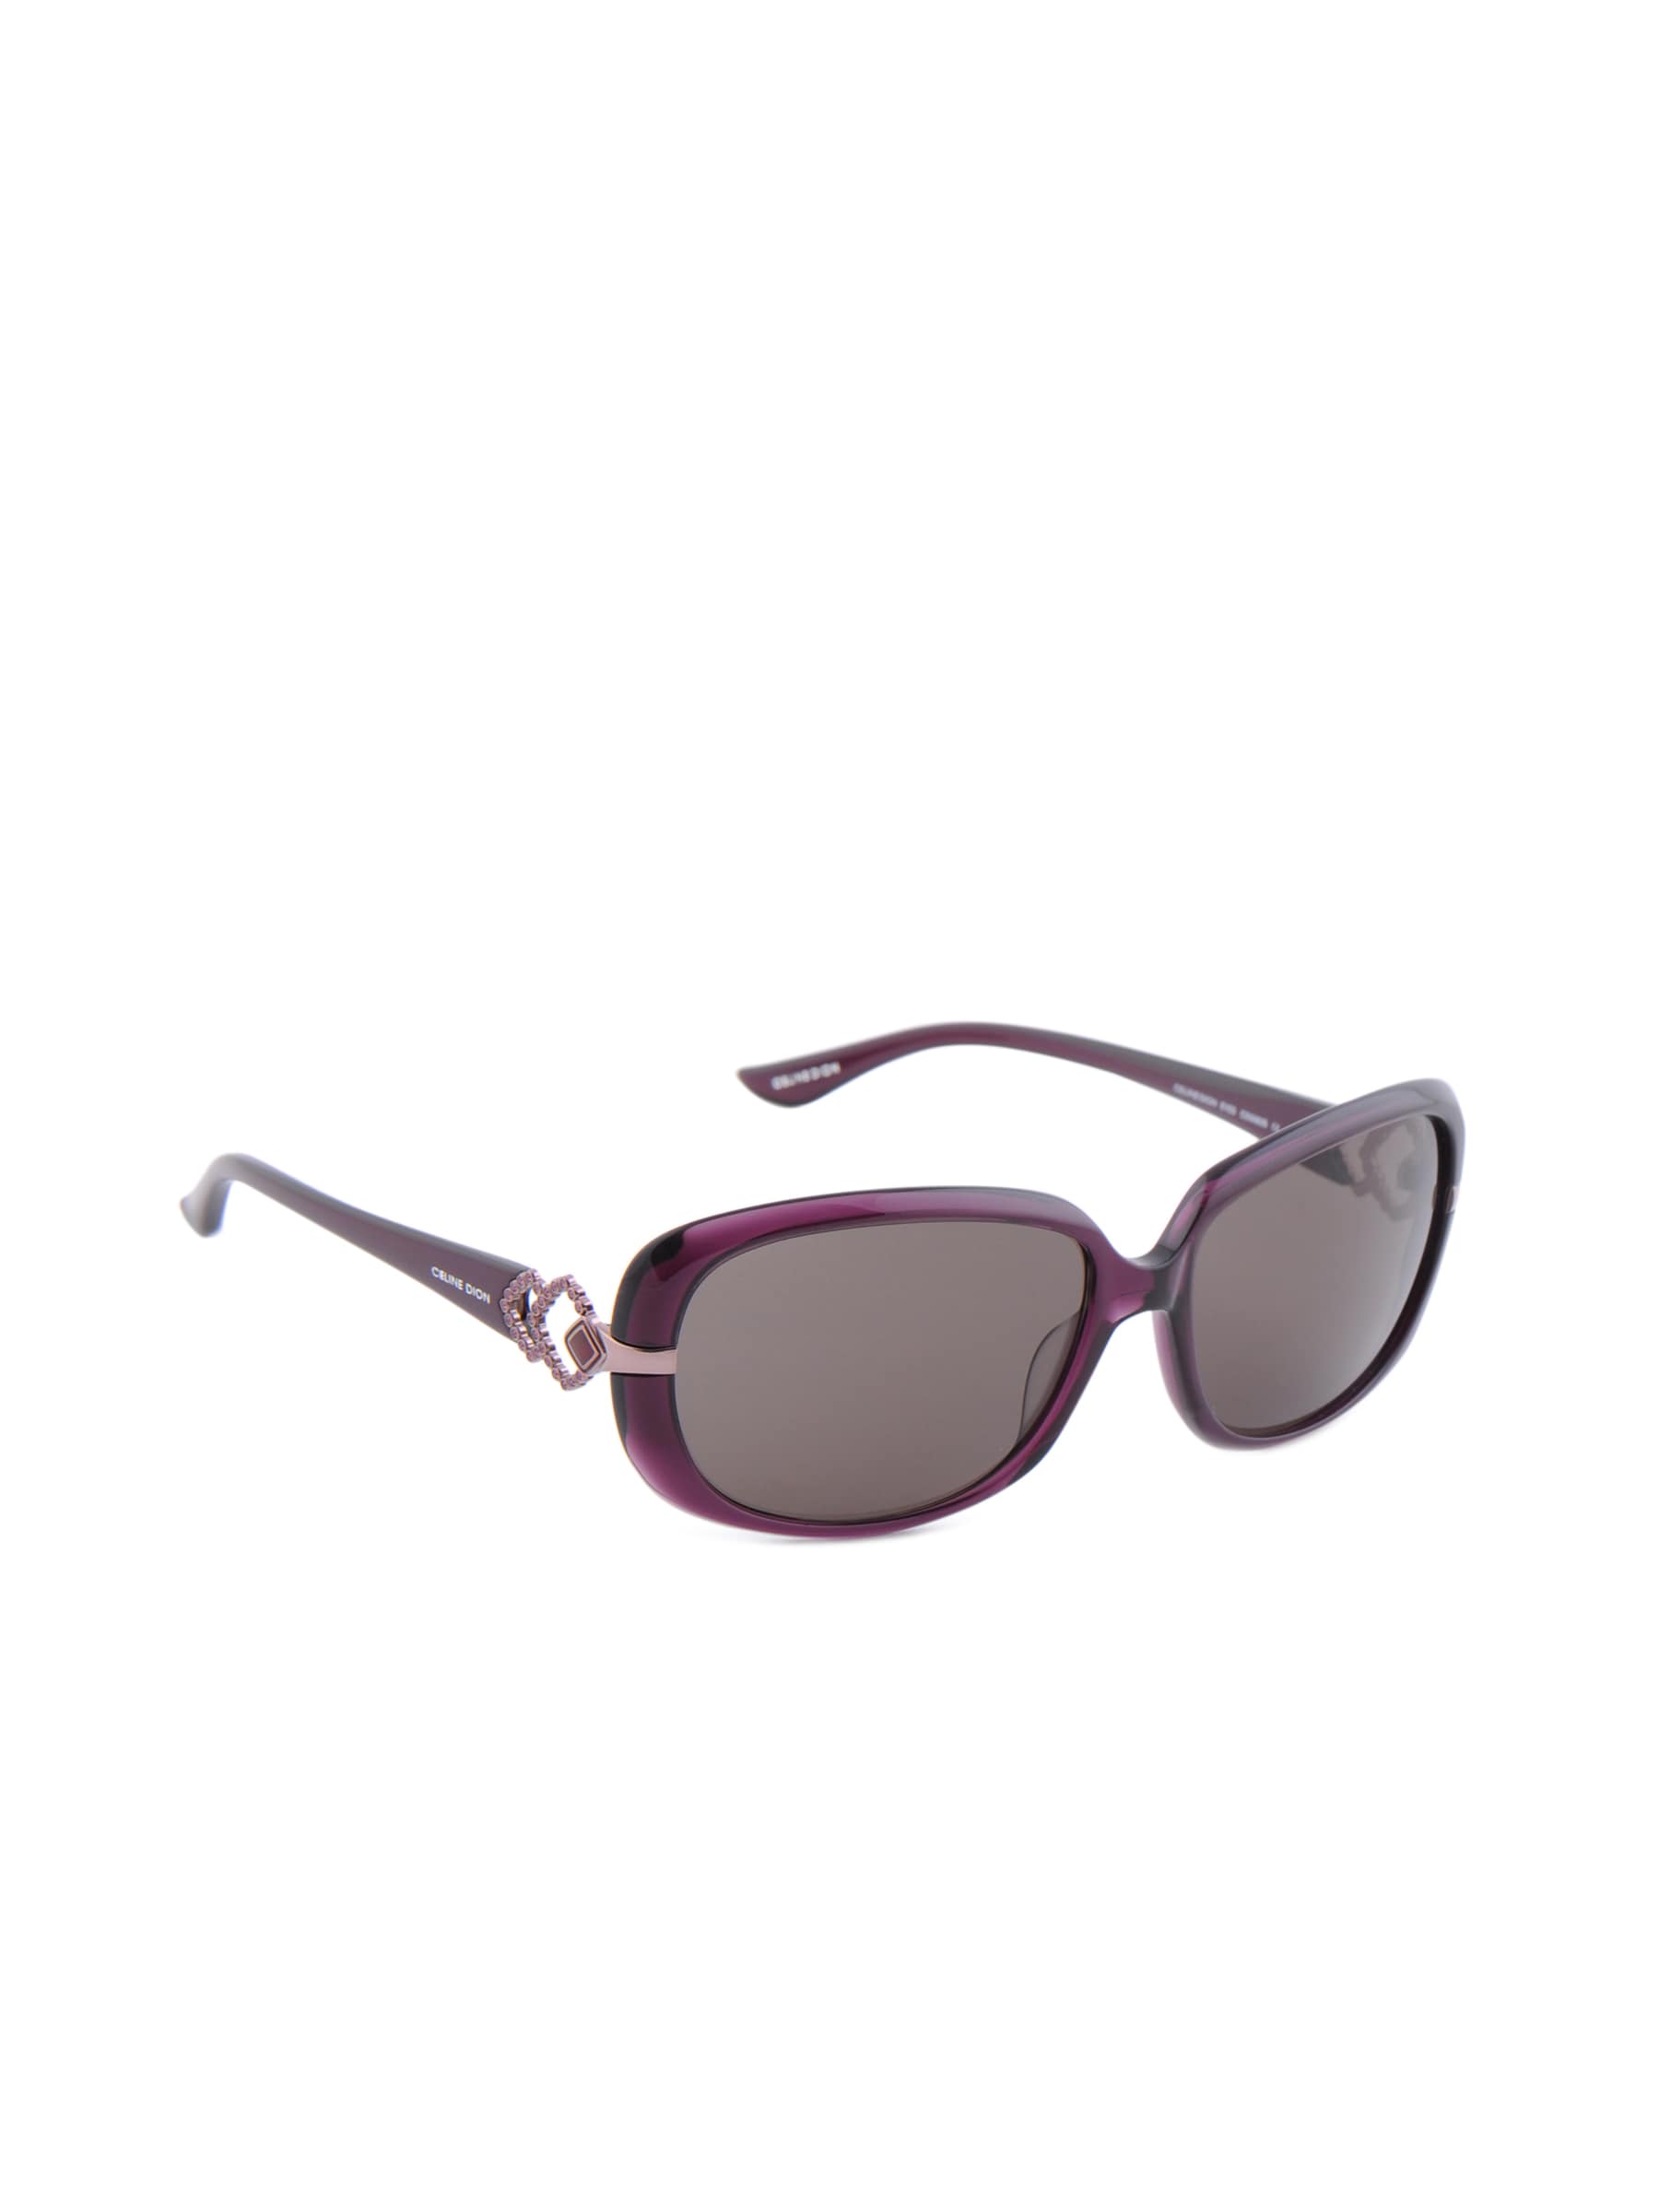 Celine Dion Women Purple Frame Sunglasses